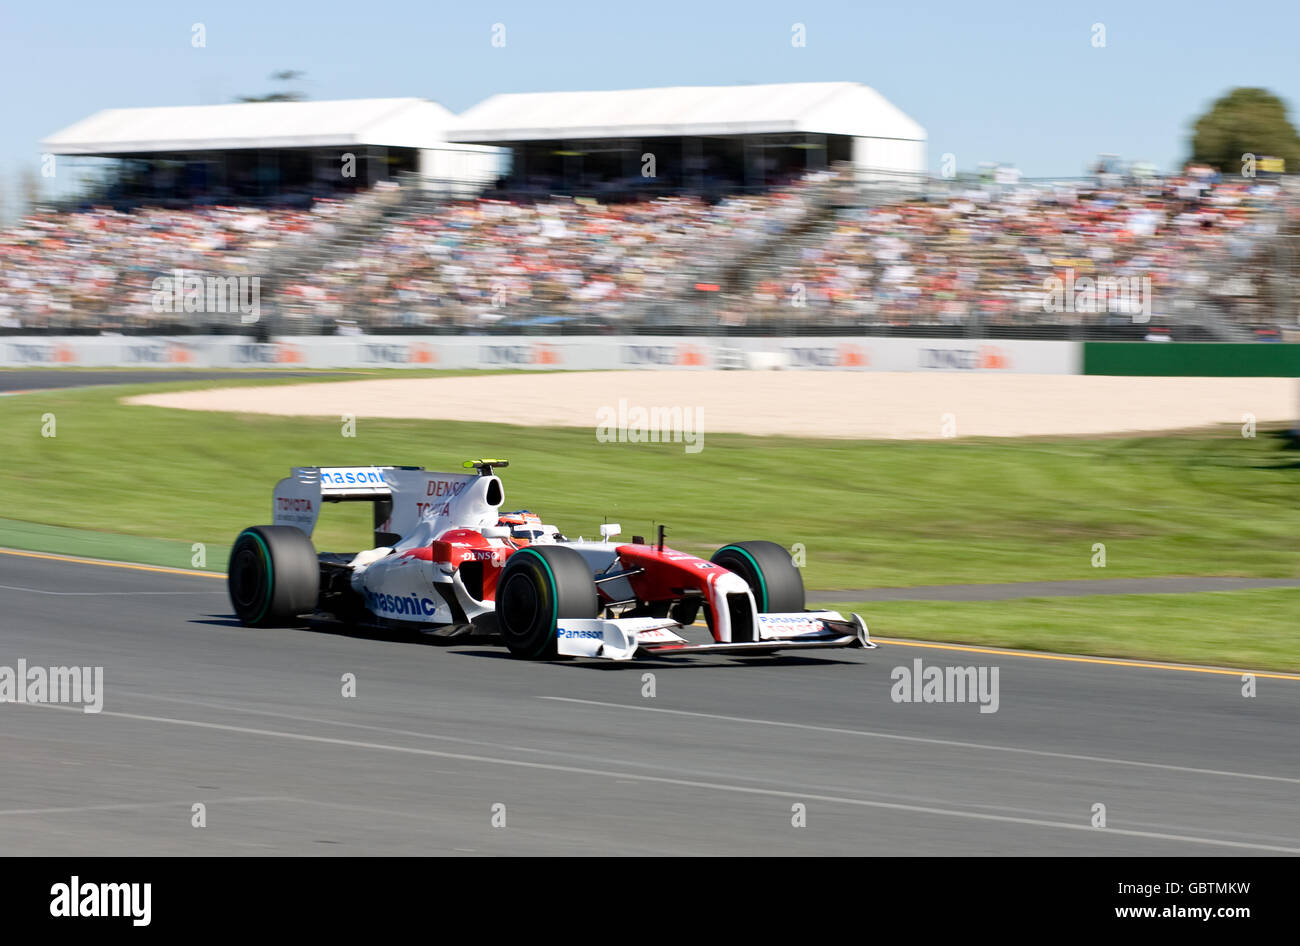 Timo Glock de Toyota durante la sesión de calificación en Albert Park, Melbourne, Australia. Foto de stock